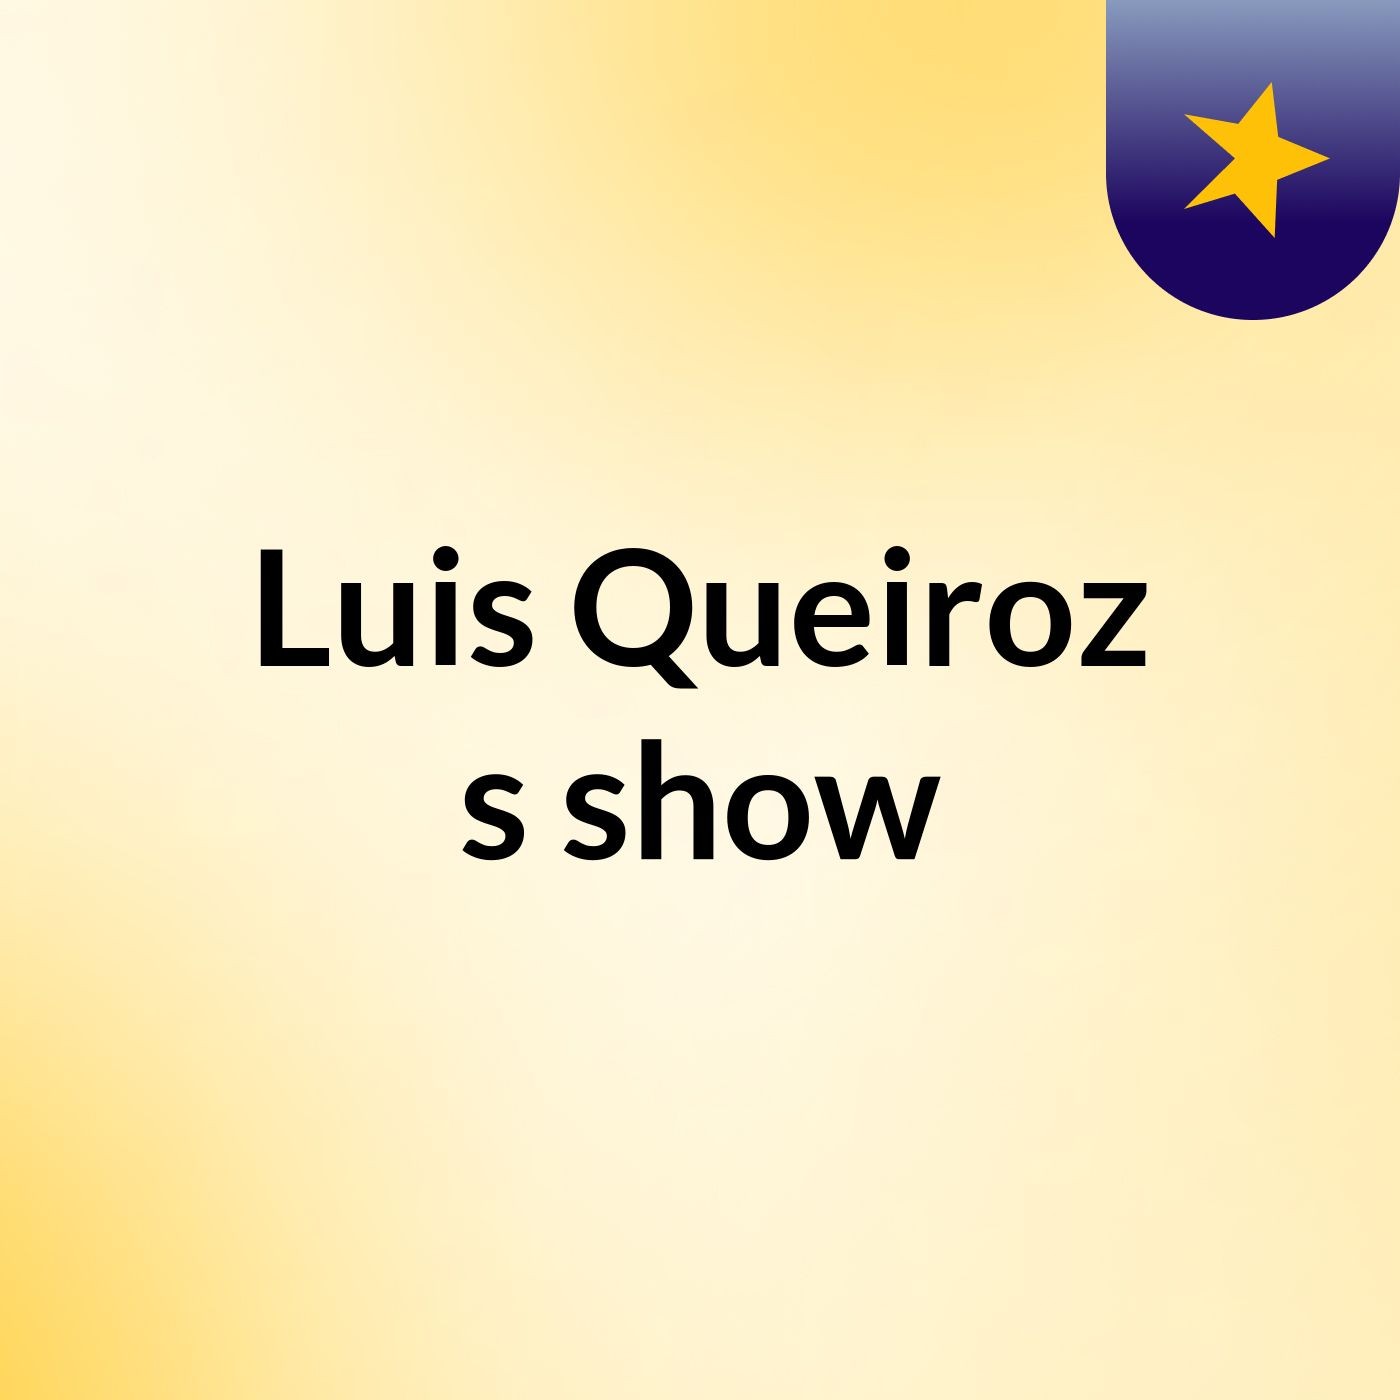 Luis Queiroz's show